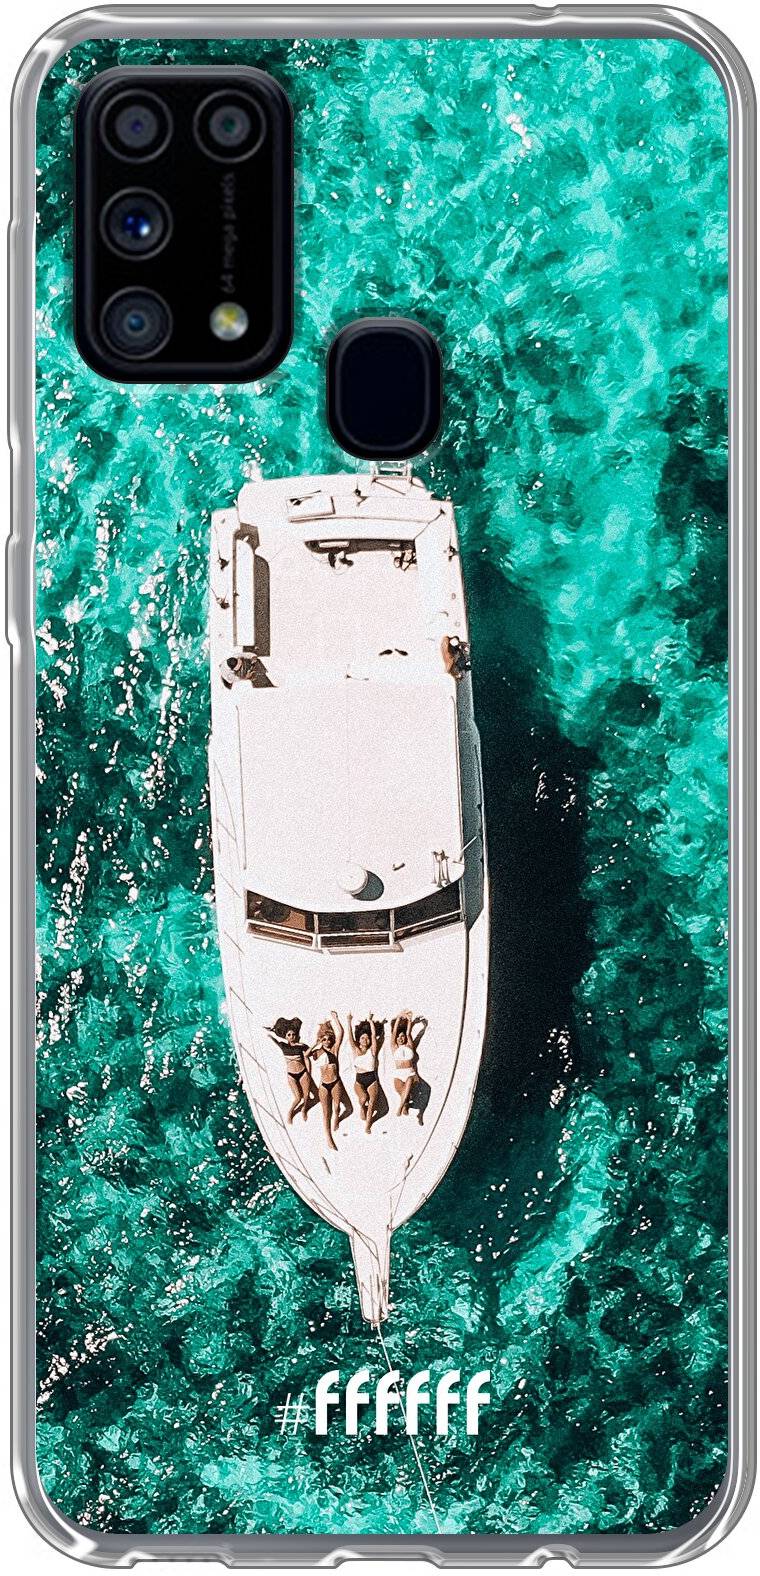 Yacht Life Galaxy M31